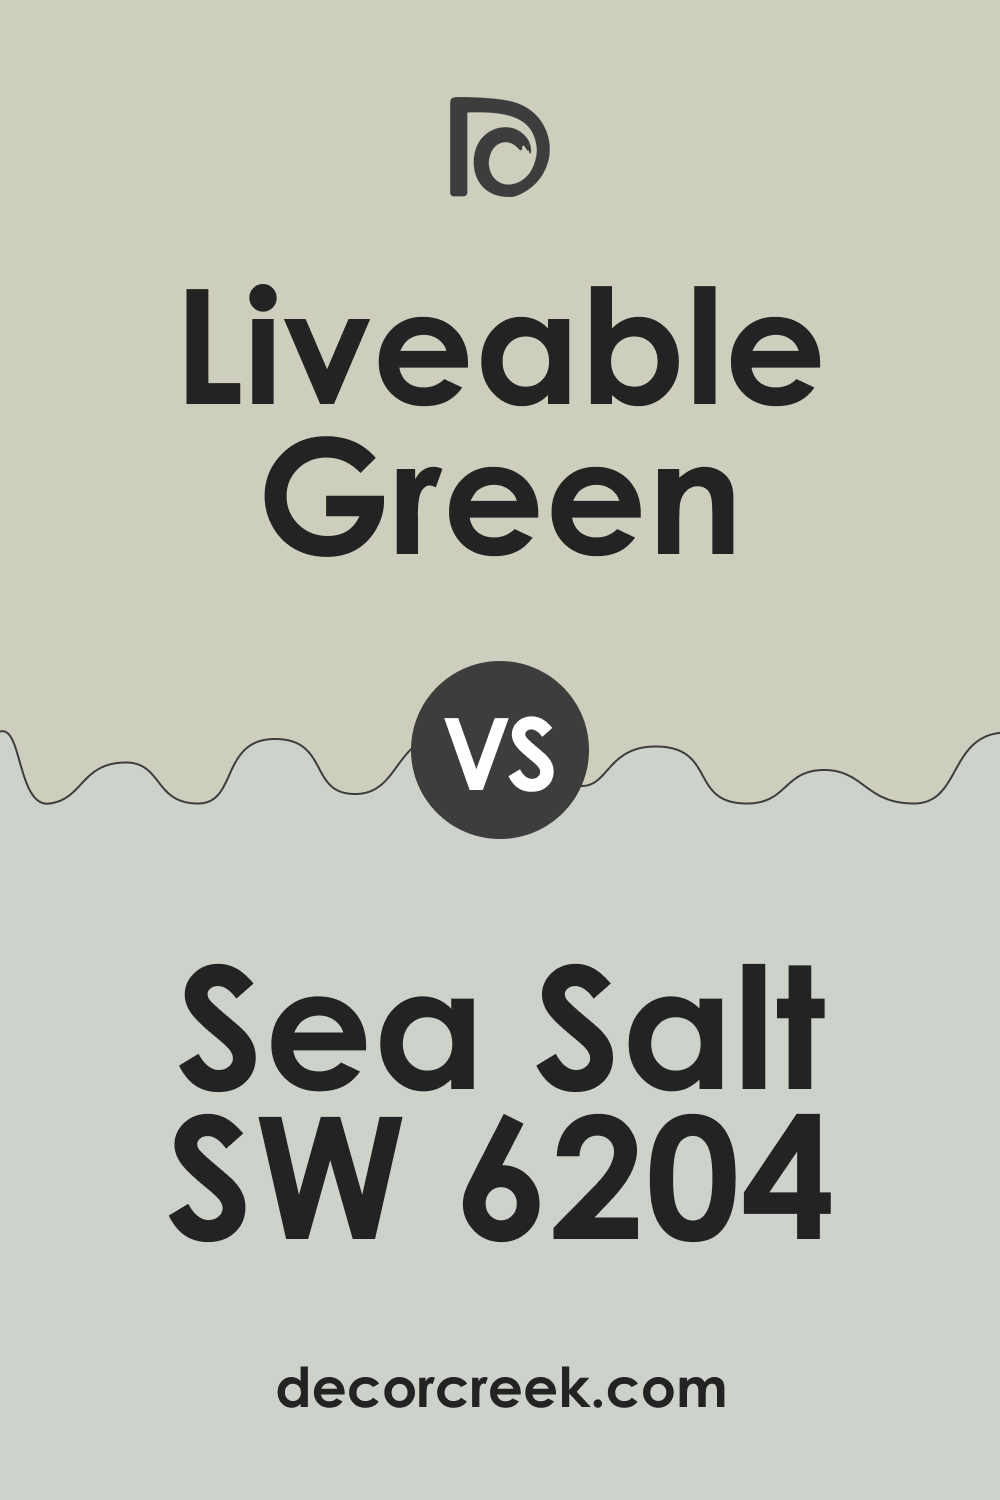 Liveable Green vs Sea Salt